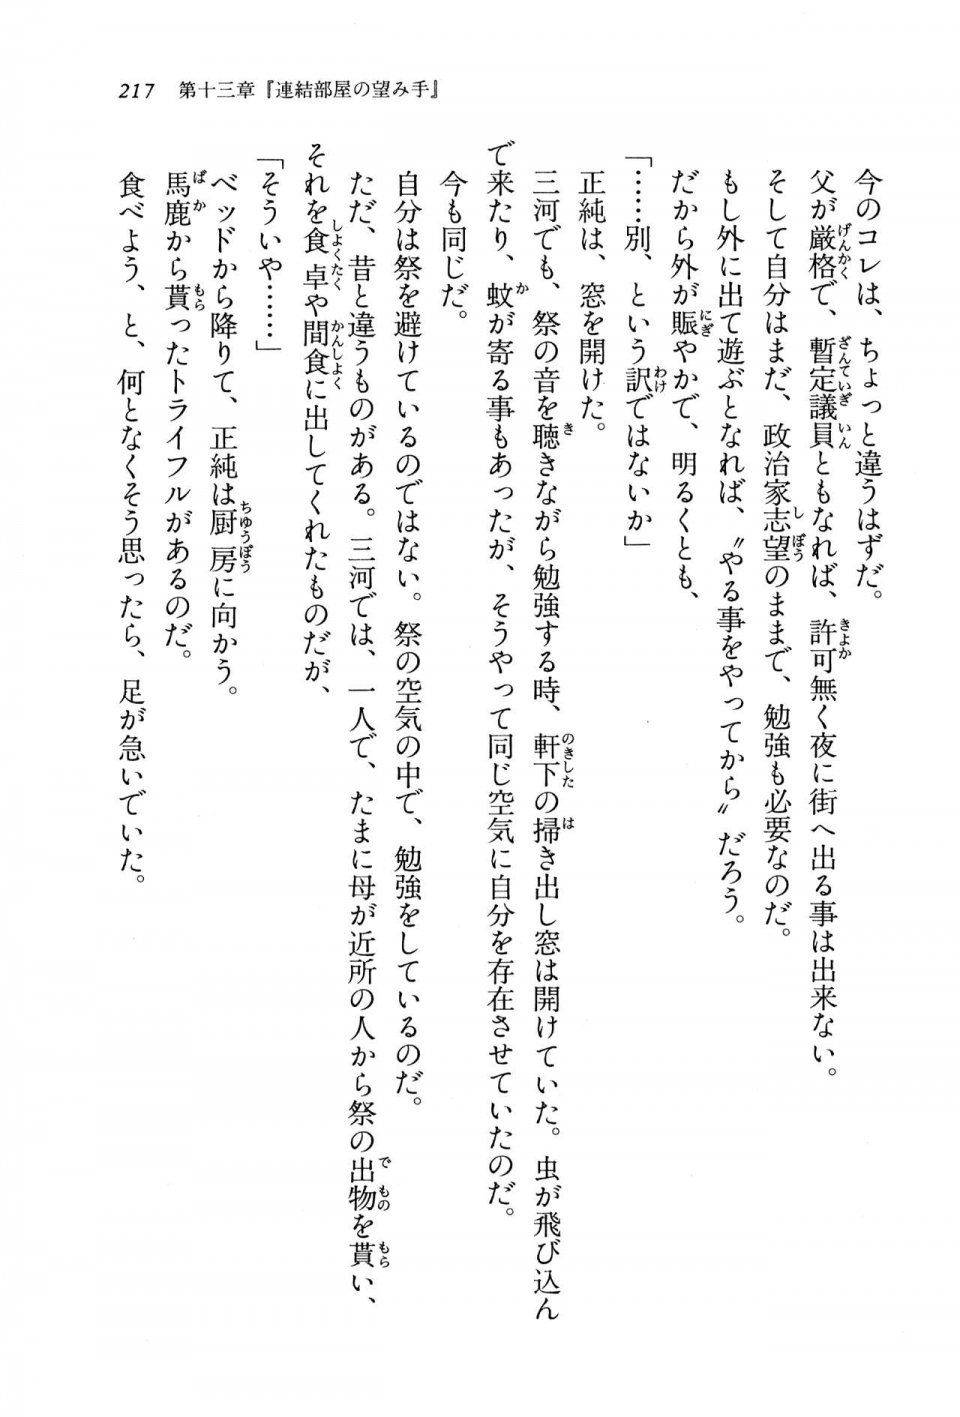 Kyoukai Senjou no Horizon BD Special Mininovel Vol 8(4B) - Photo #221